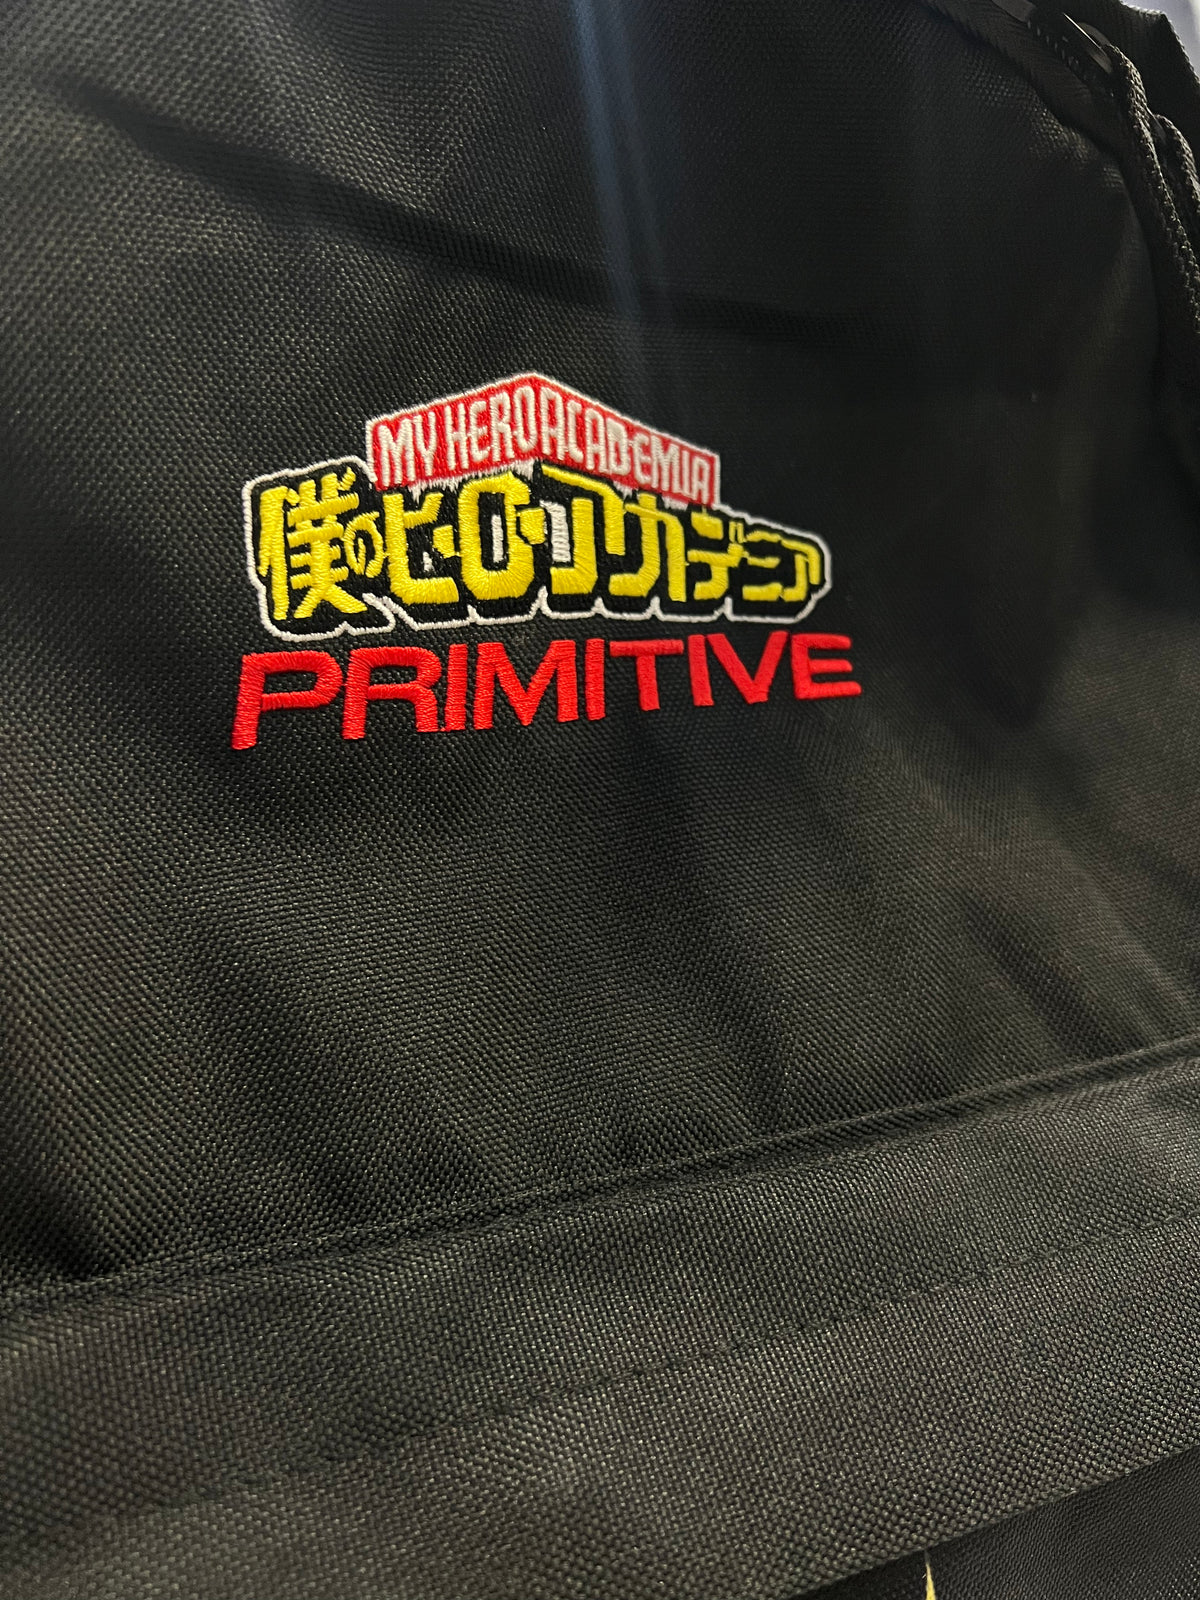 Primitive x My Hero Academia Backpack (Black)